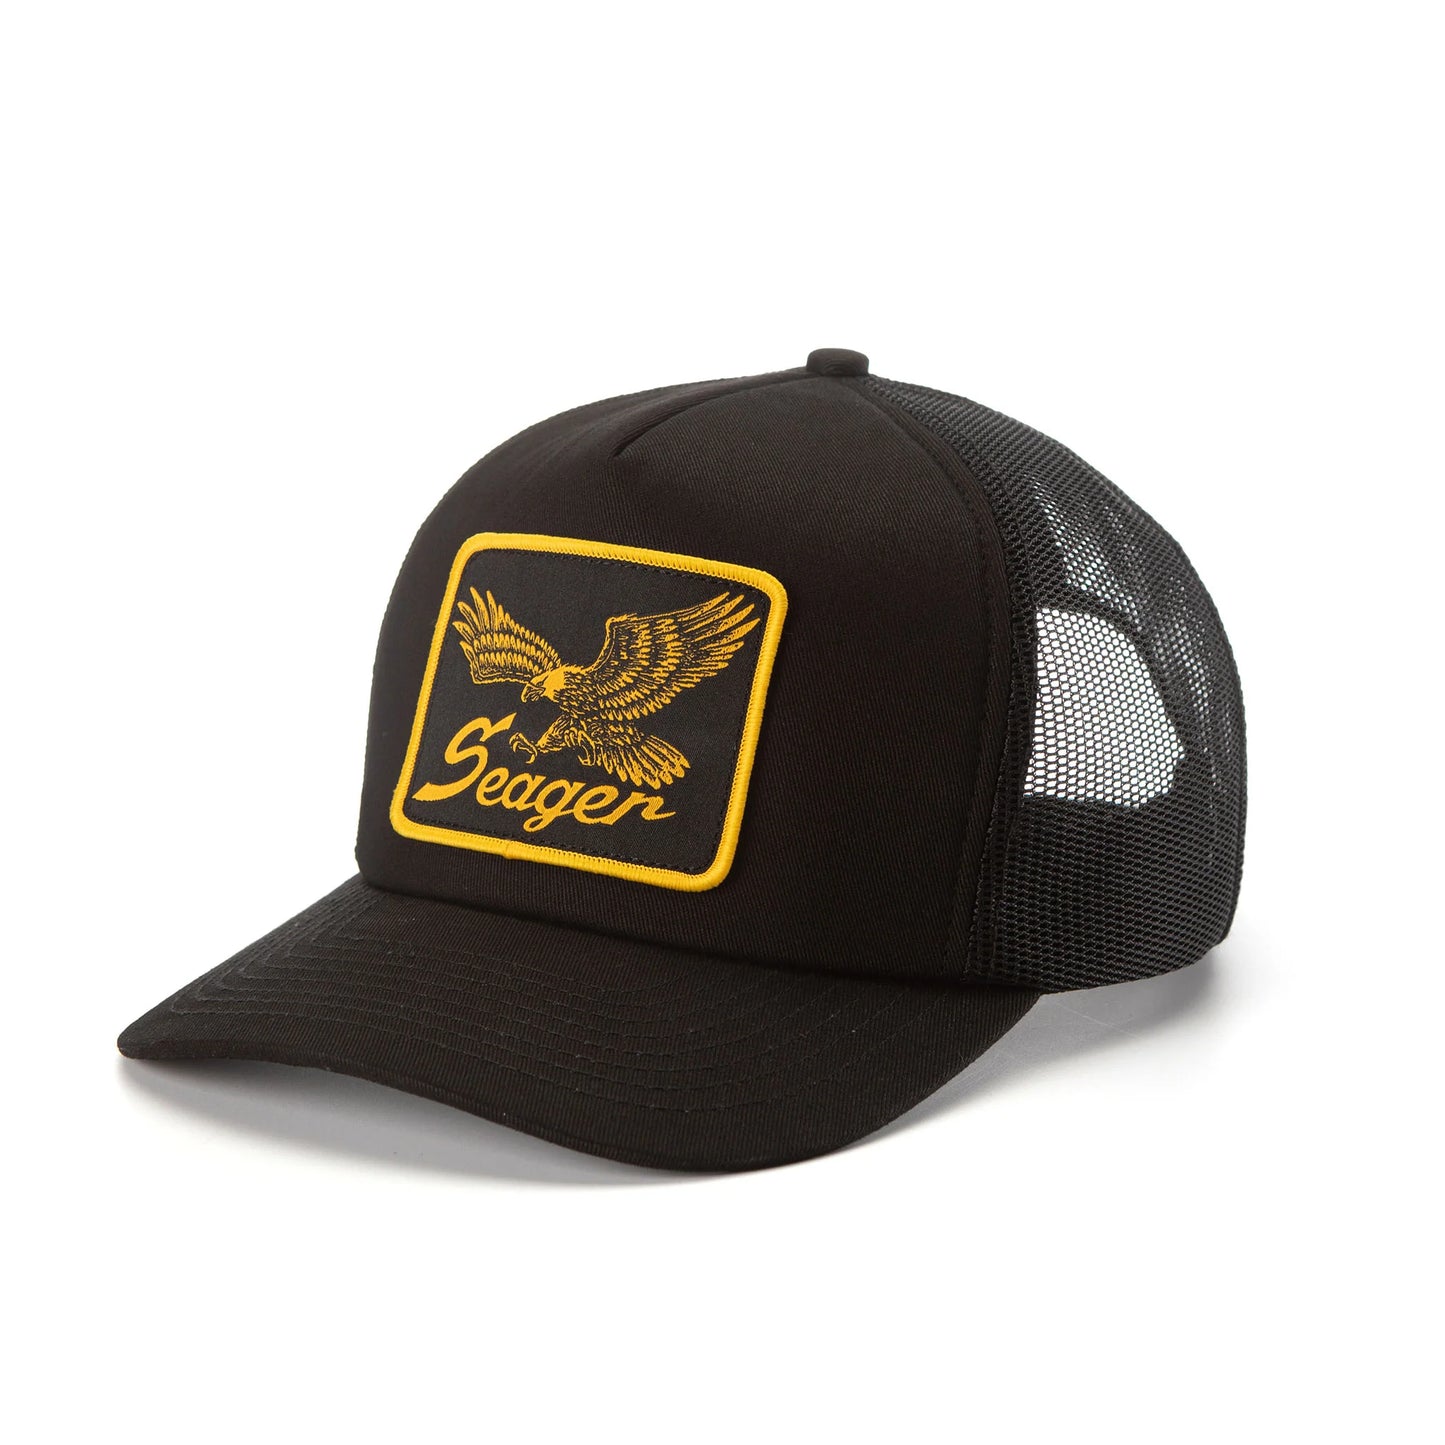 Seager's black Wingspan Trucker Snapback Hat